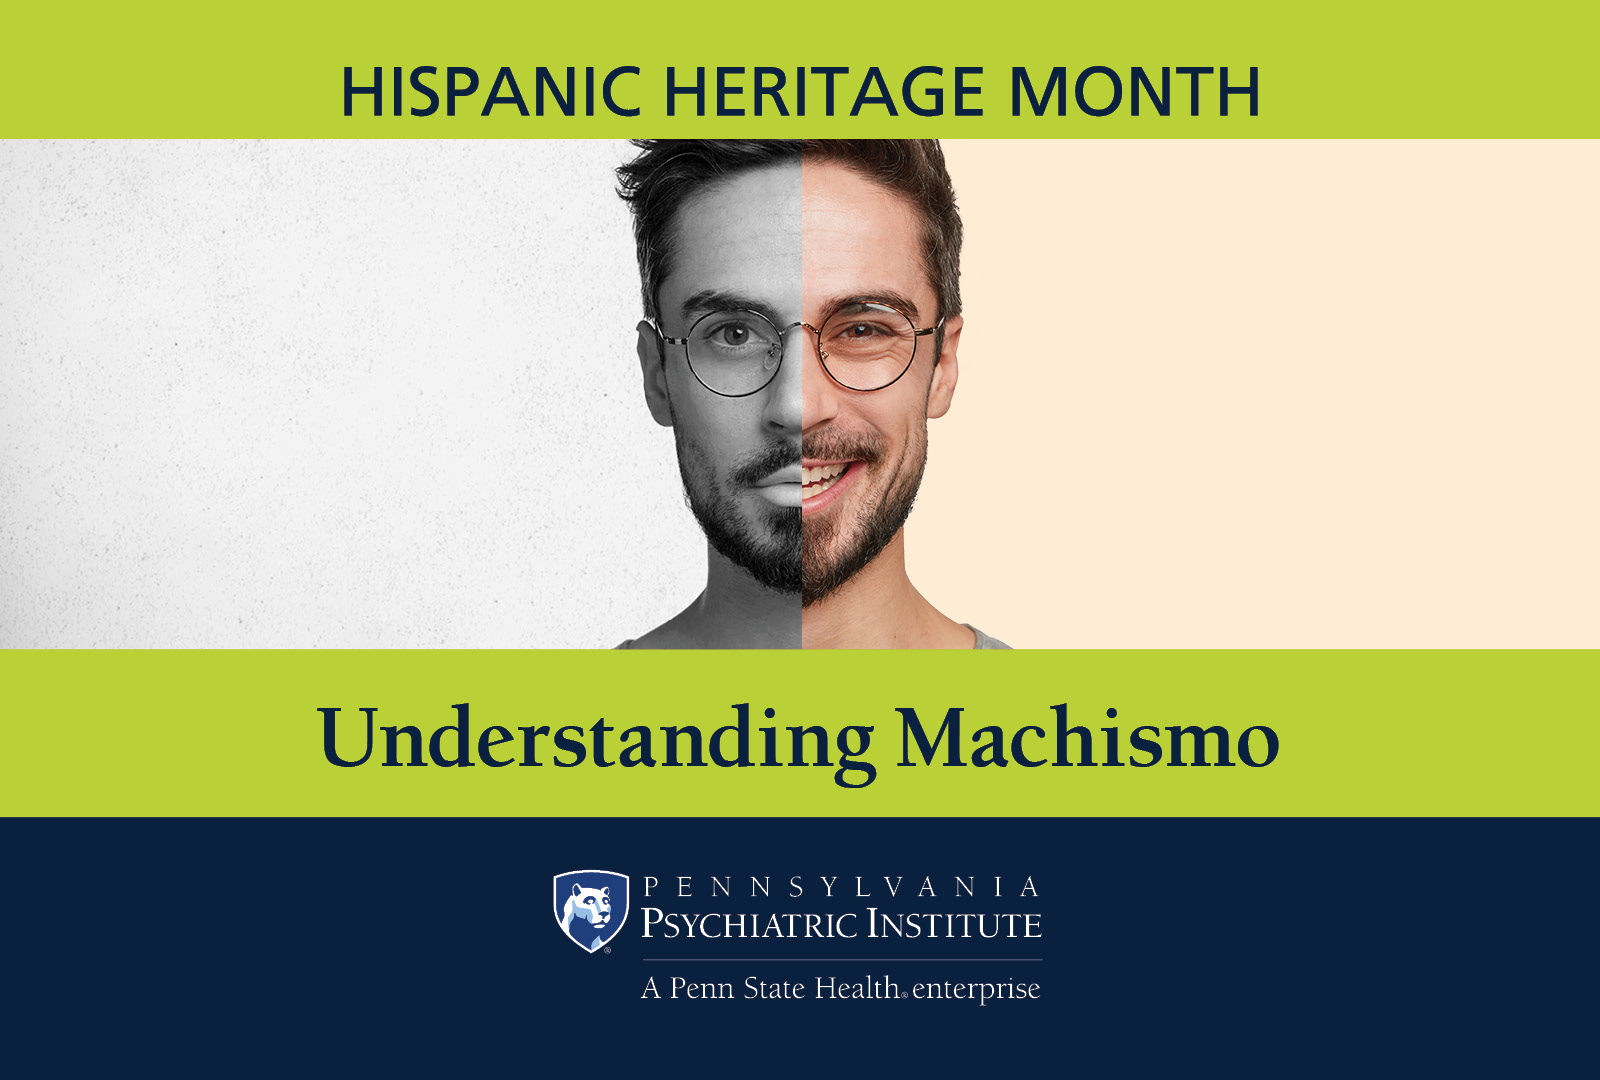 Hispanic Heritage Month: Understanding Machismo Pennsylvania Psychiatric Institute, A Penn State Health enterprise